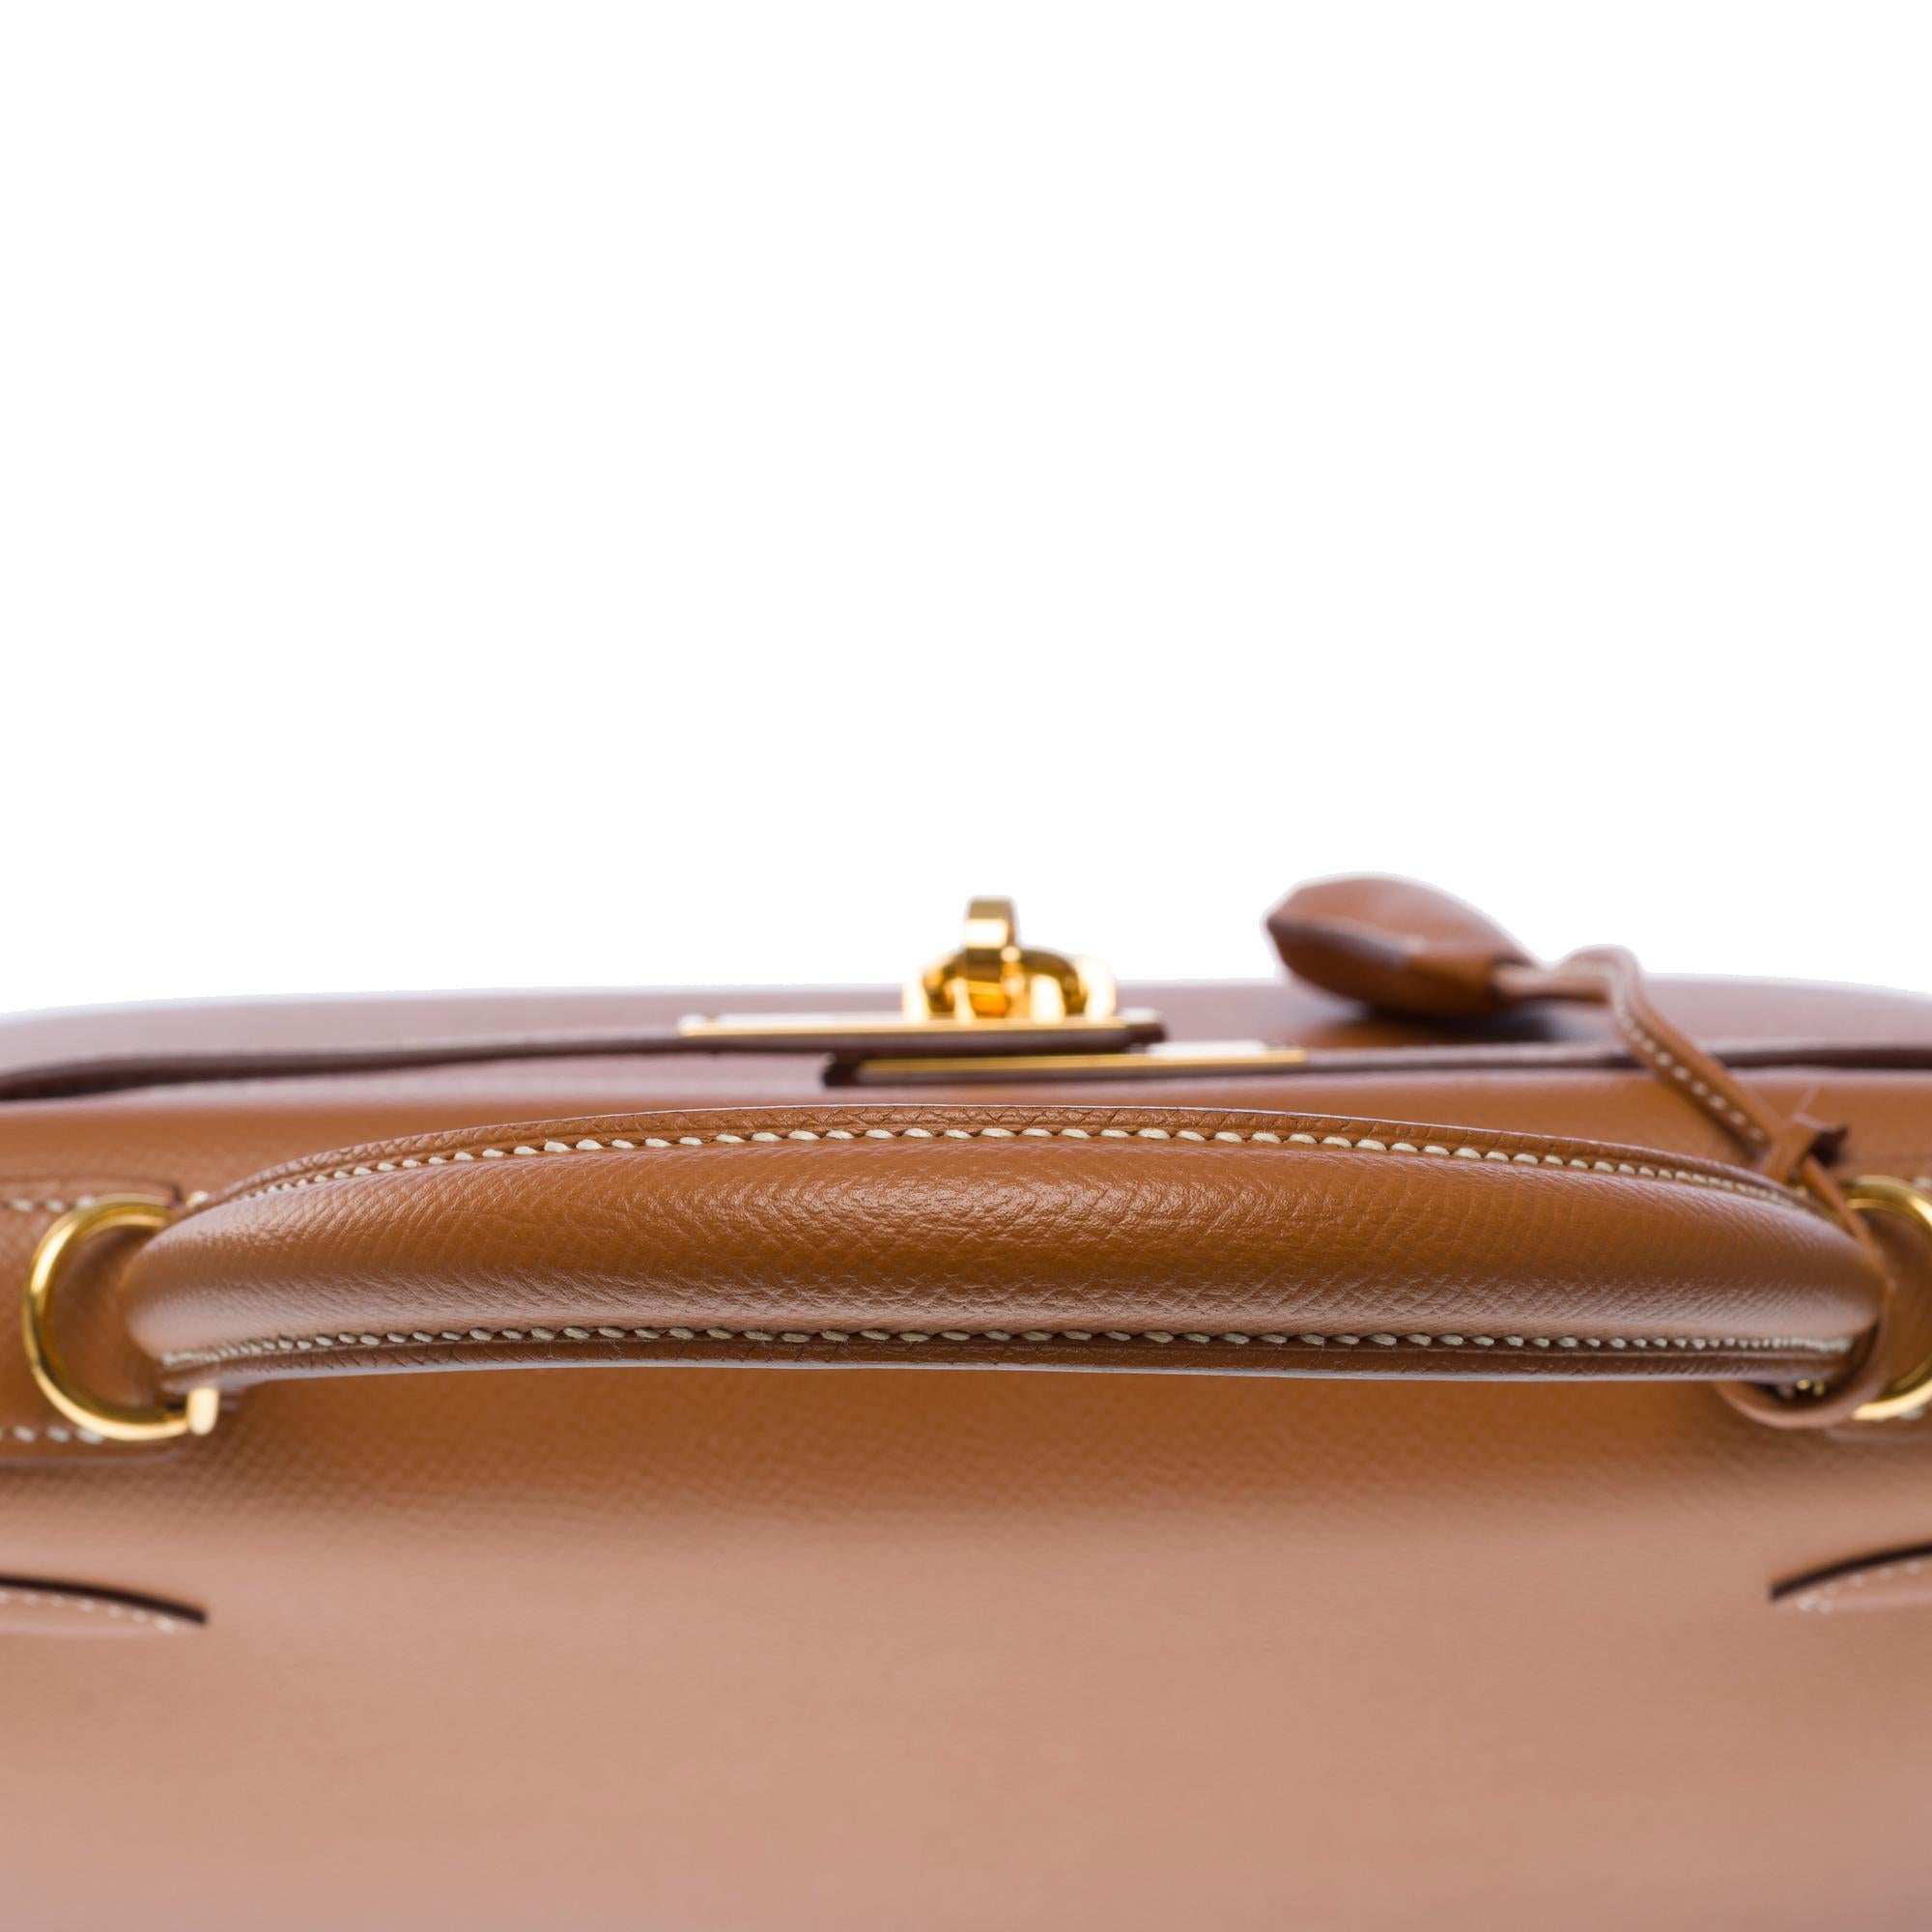 Amazing Hermès Kelly 28 sellier handbag strap in Camel/Gold Epsom leather, GHW 6